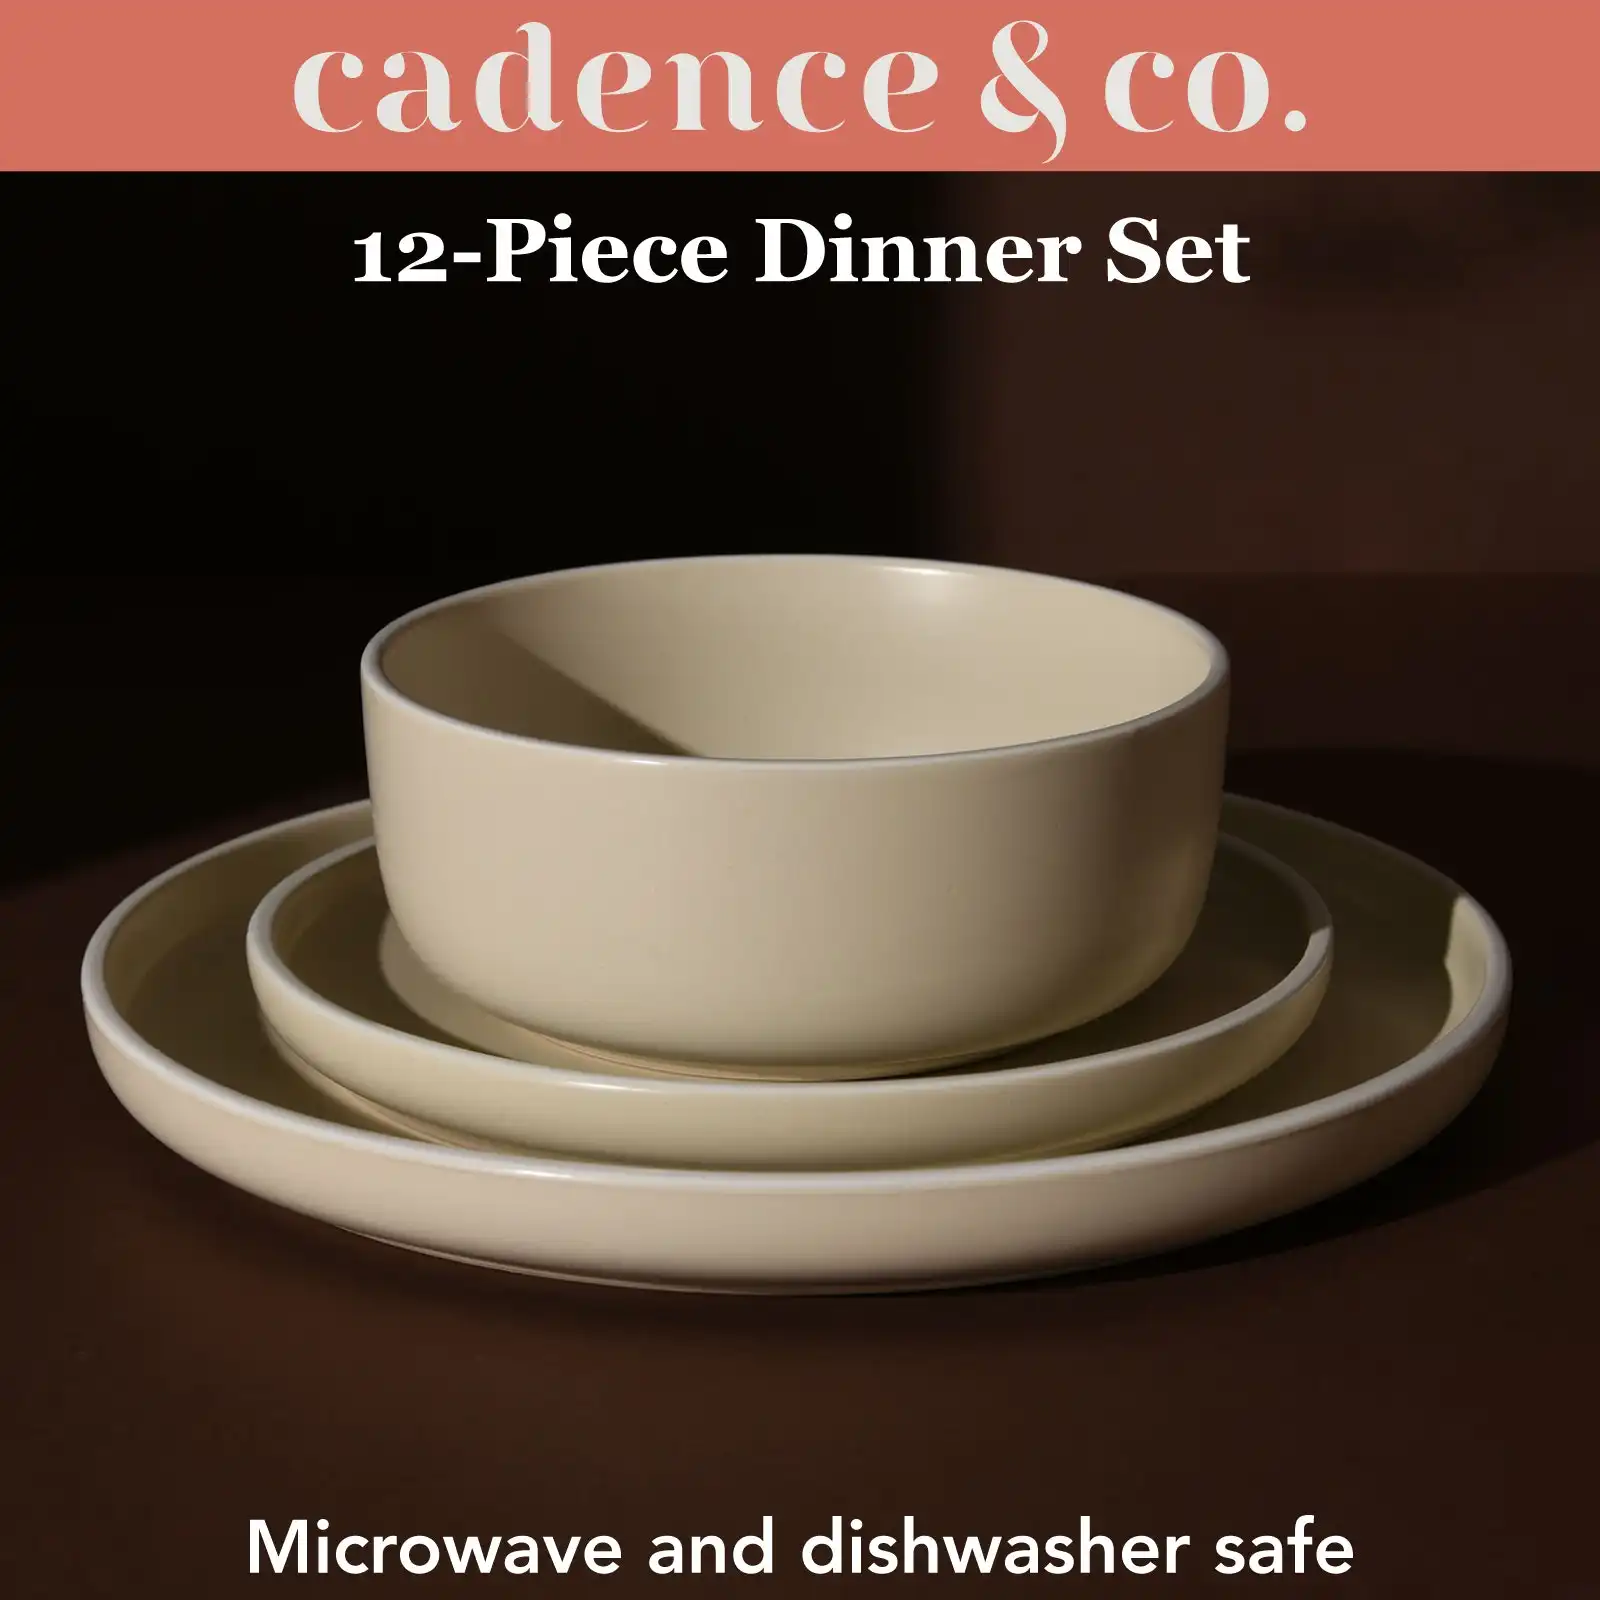 Cadence & Co. Muse 12-Piece Dinner Set Matte Glaze Sand/White 4 person